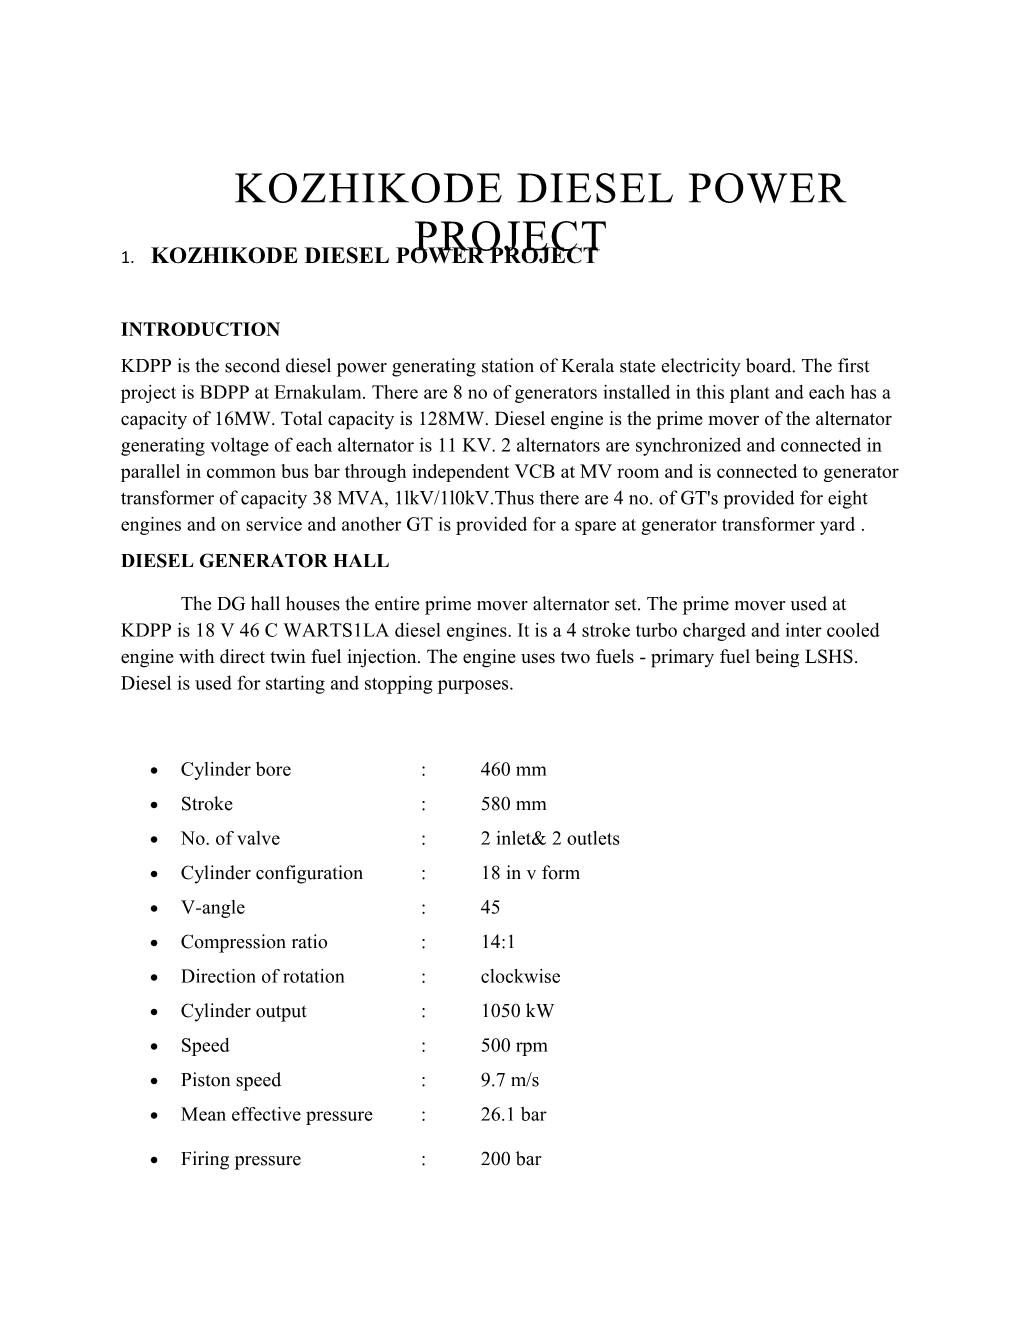 1. Kozhikode Diesel Power Project